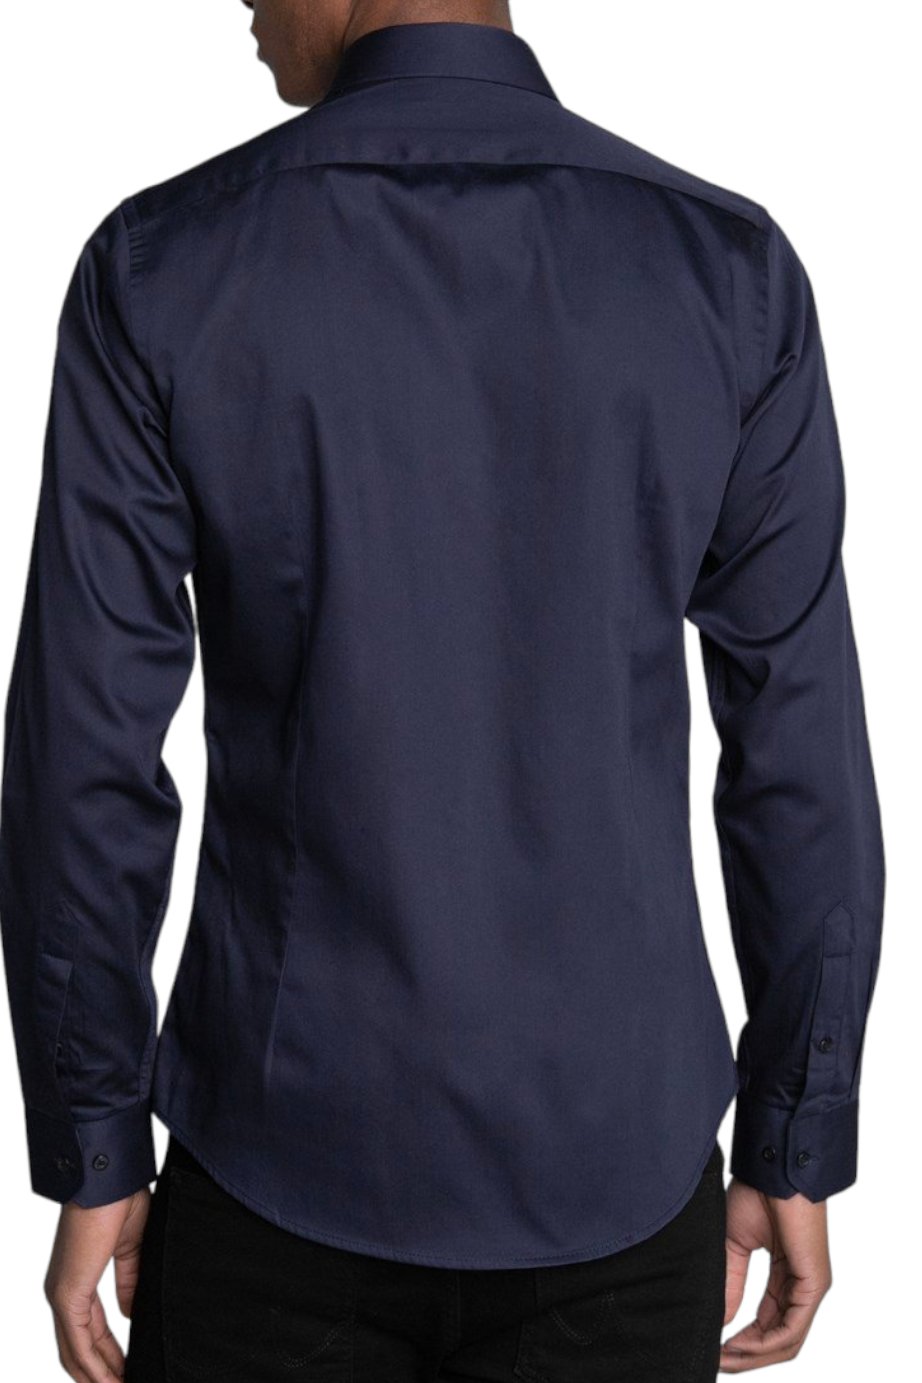 Slim Fit Long Sleeve Cotton Satin Light Navy blue Shirt 99percenthandmade   